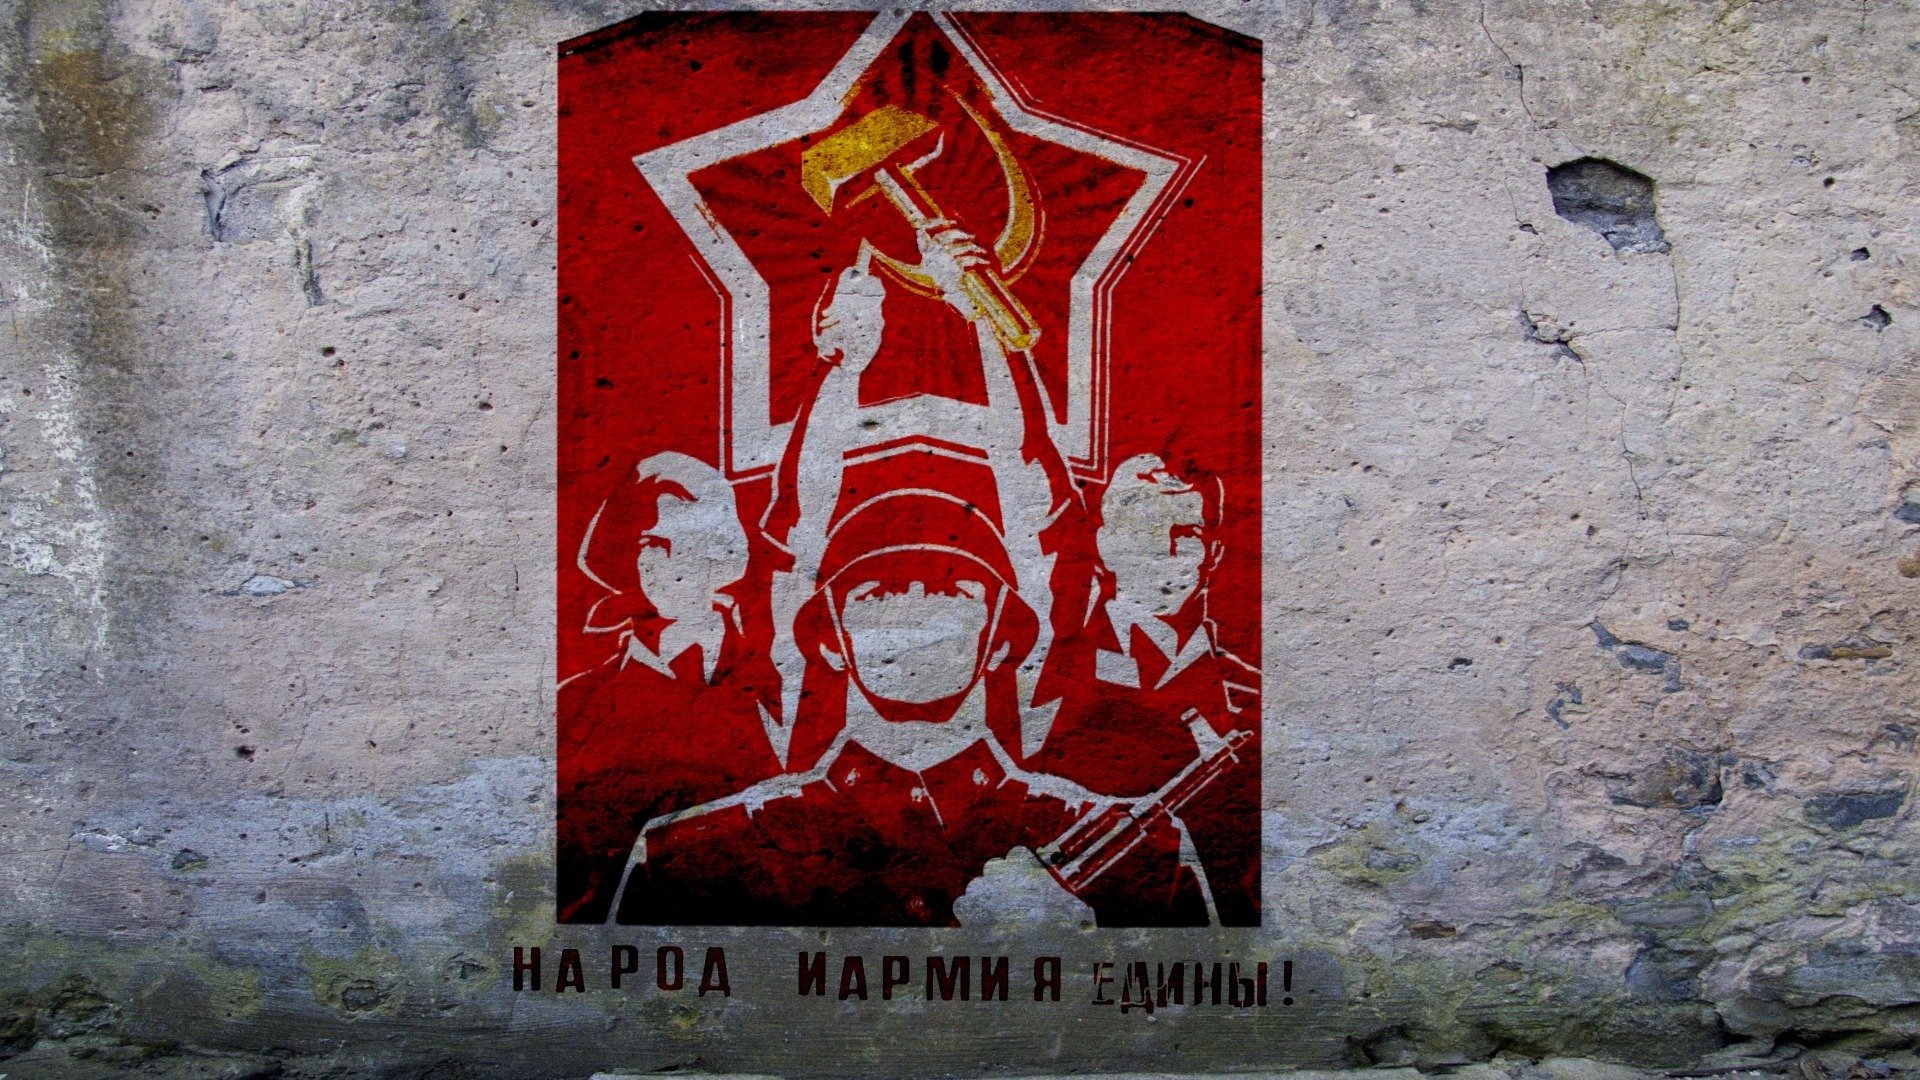 Communism HD Wallpaper | Background Image | 1920x1080 | ID:363883